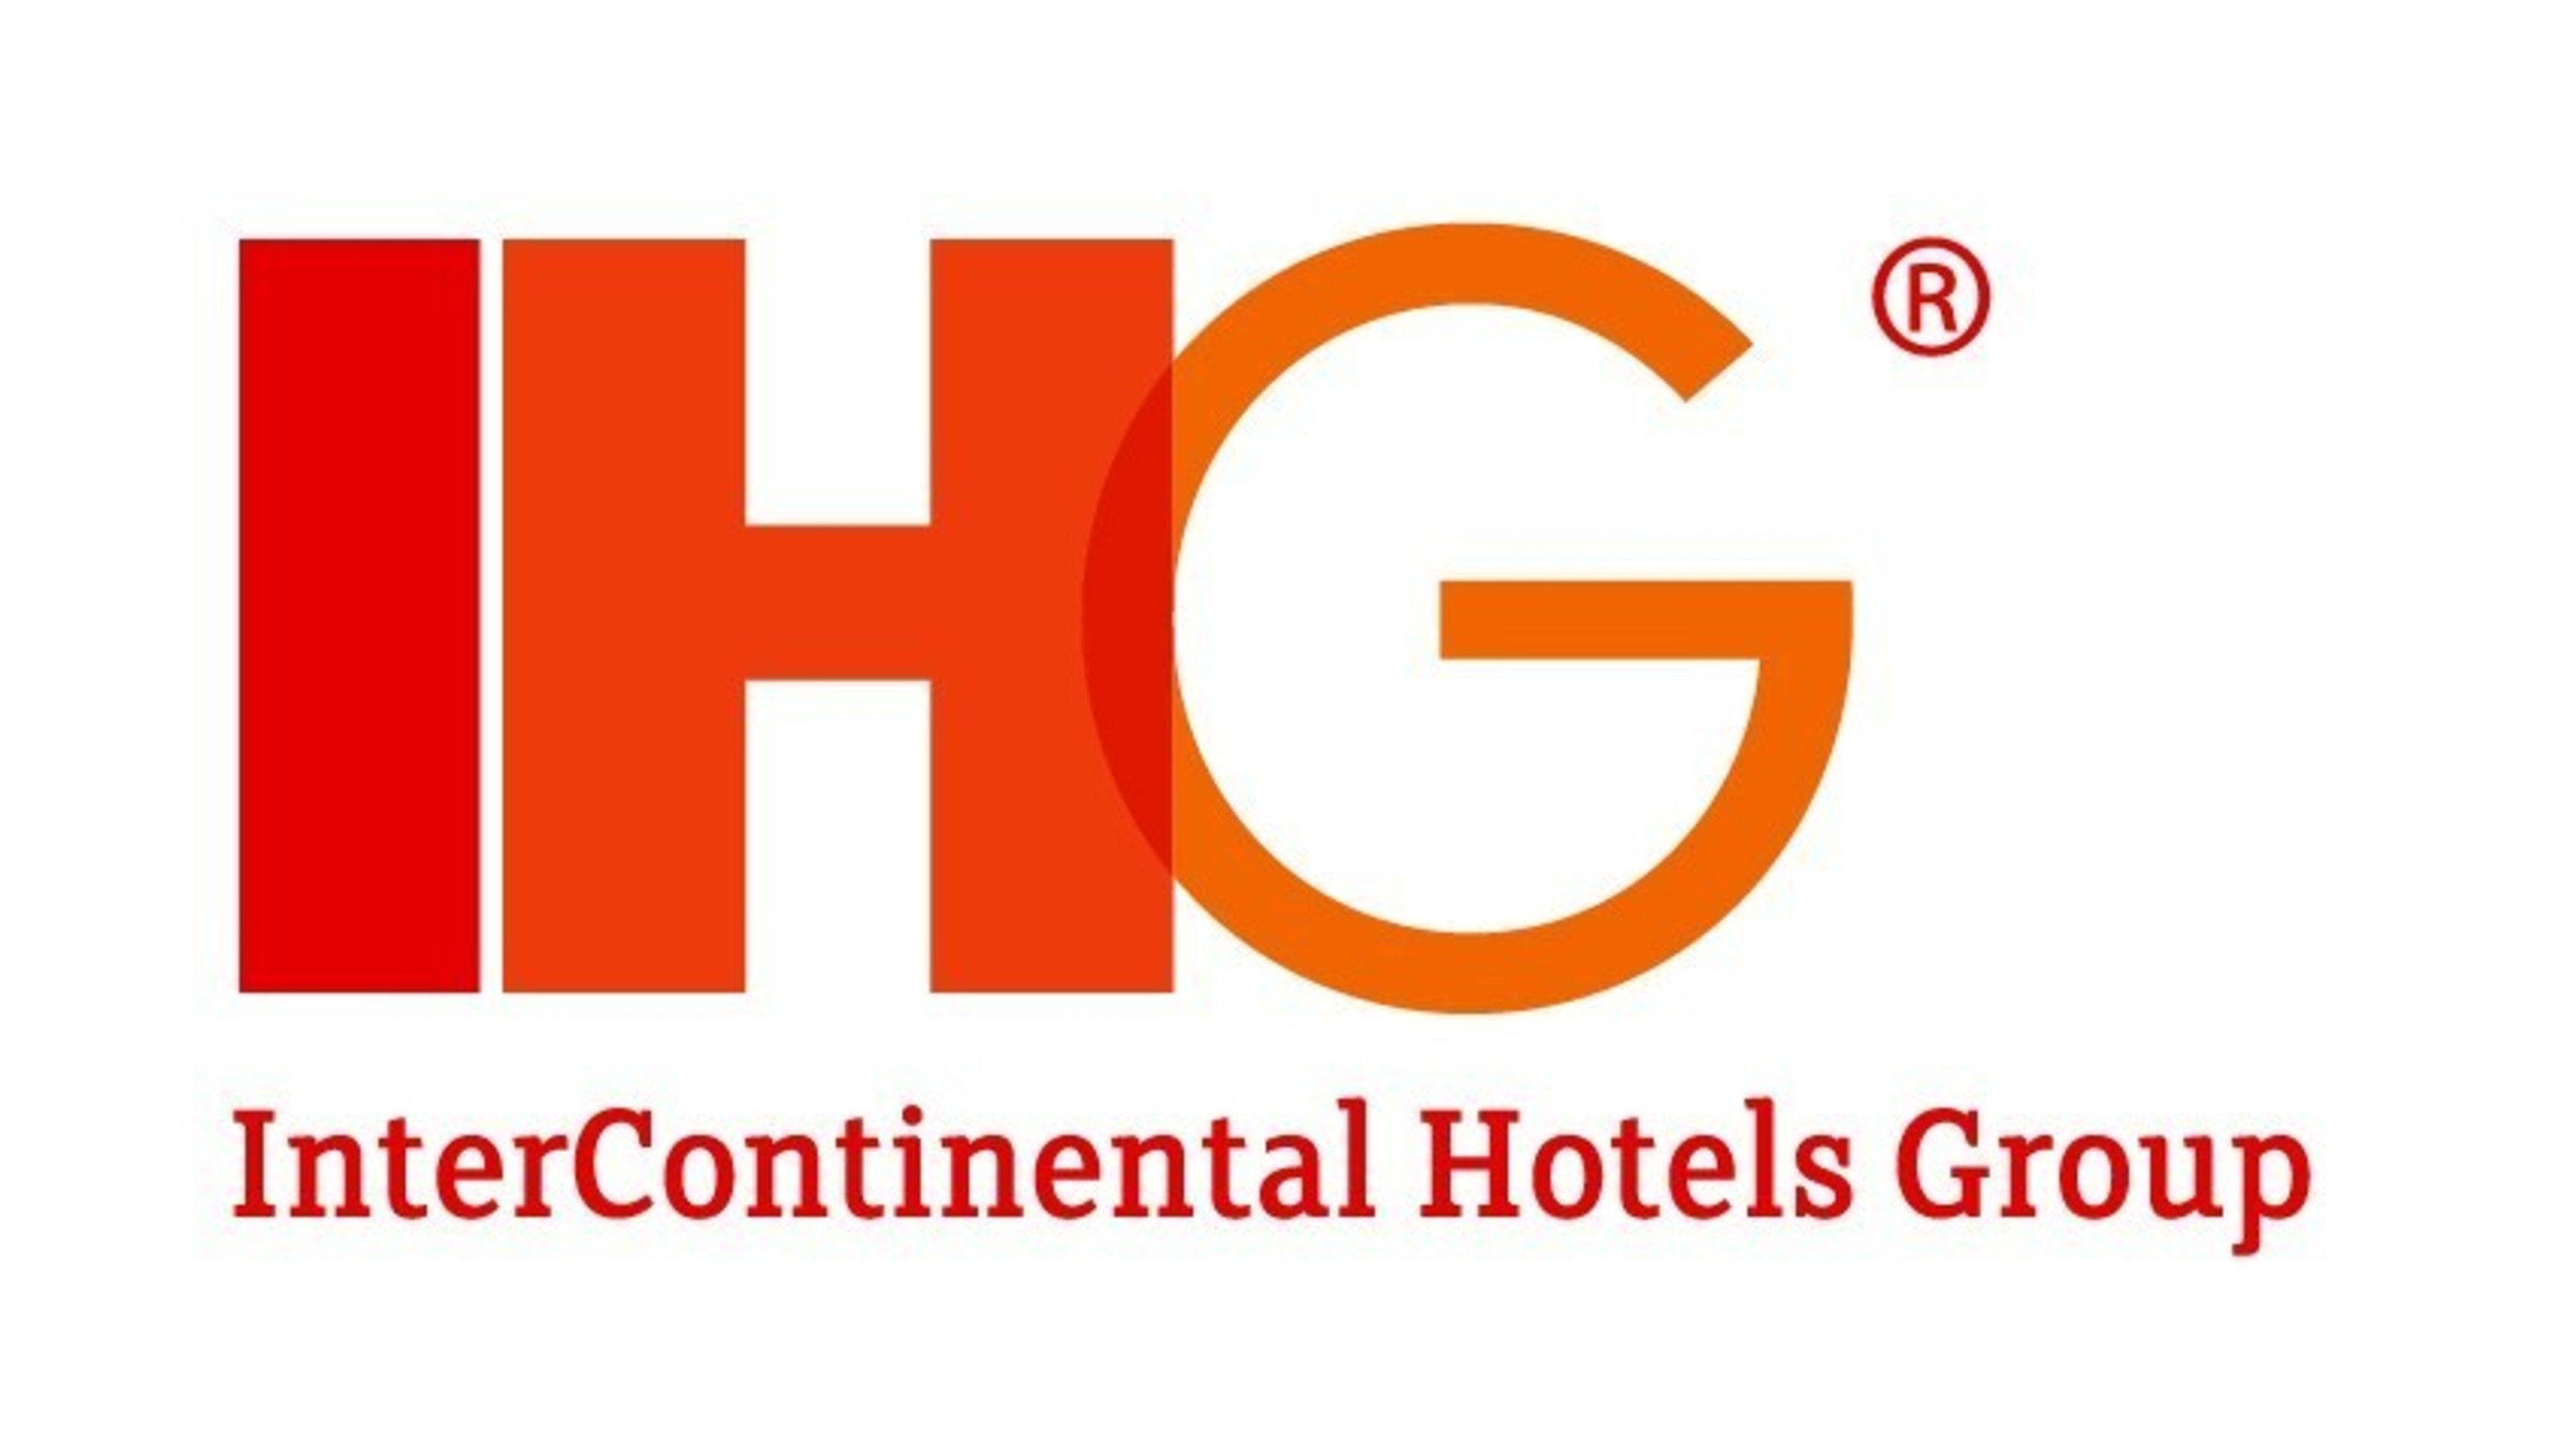 IHG® Hotels & Resorts Offers A Fresh Take On Clean